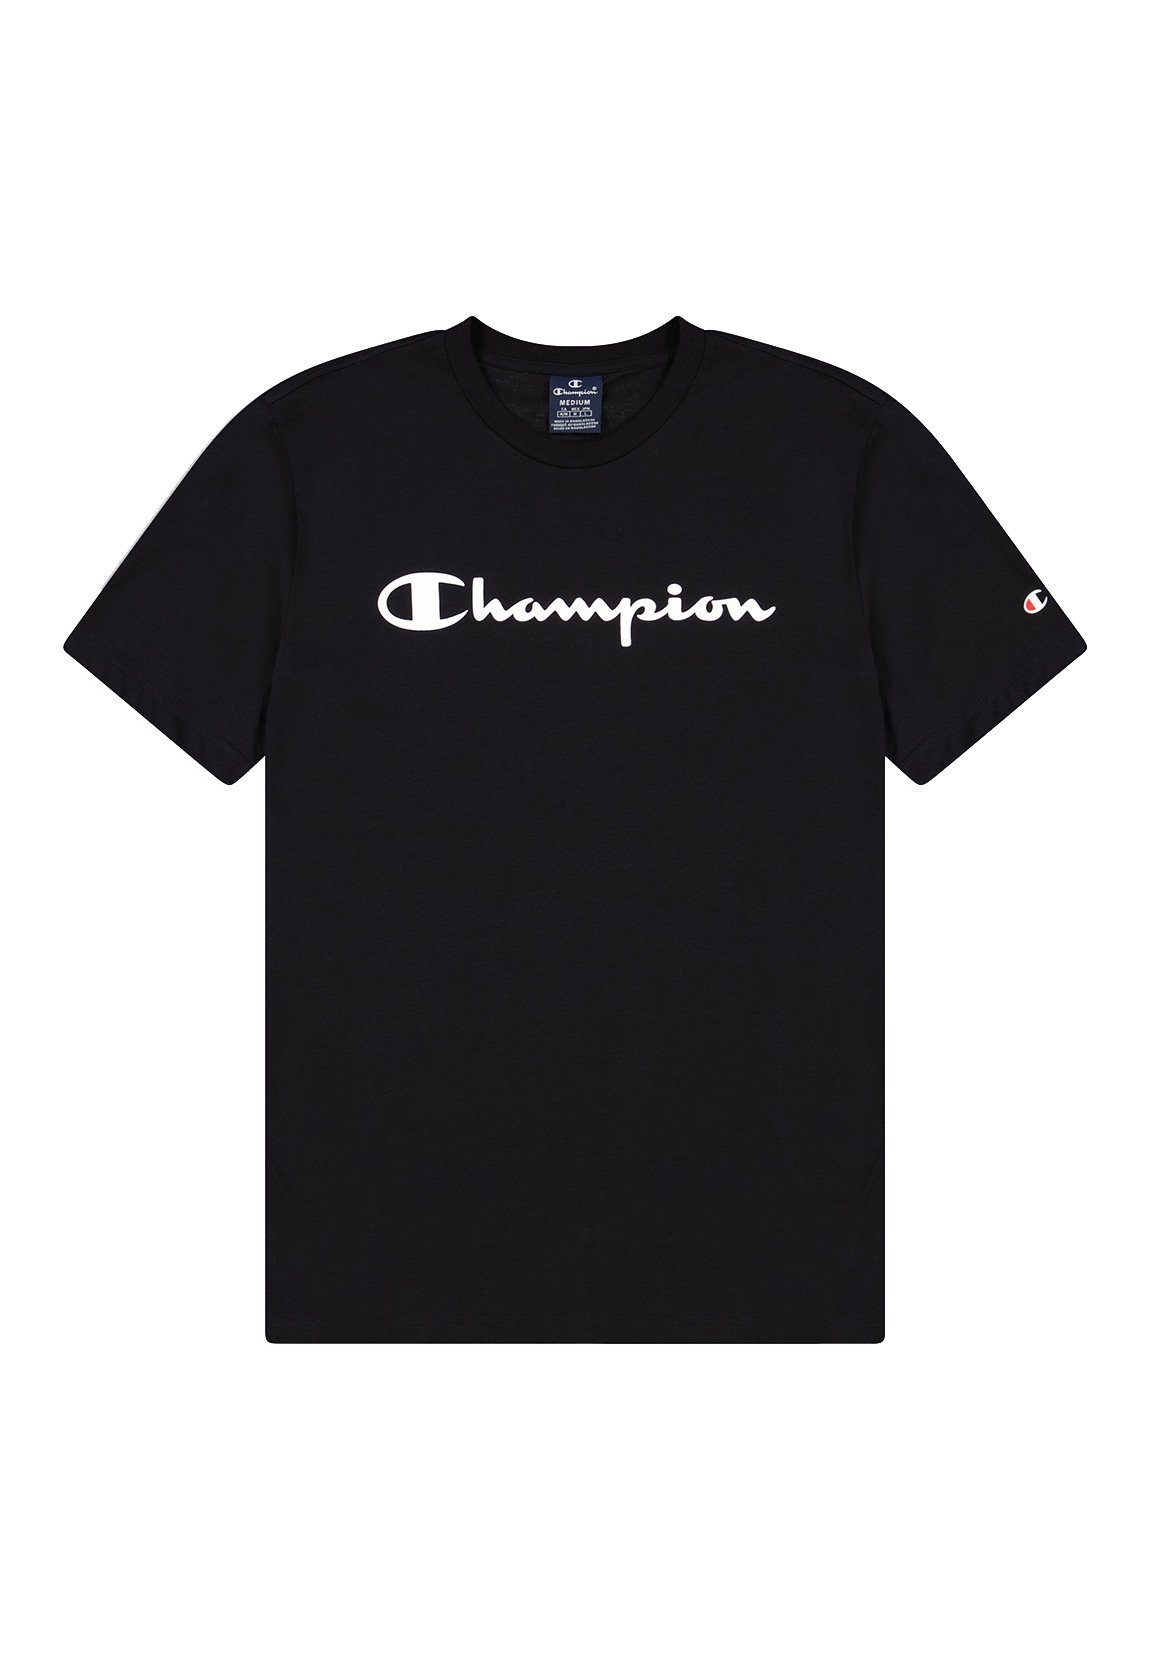 KK001 Champion NBK T-Shirt 219098 T-Shirt Champion Schwarz Herren